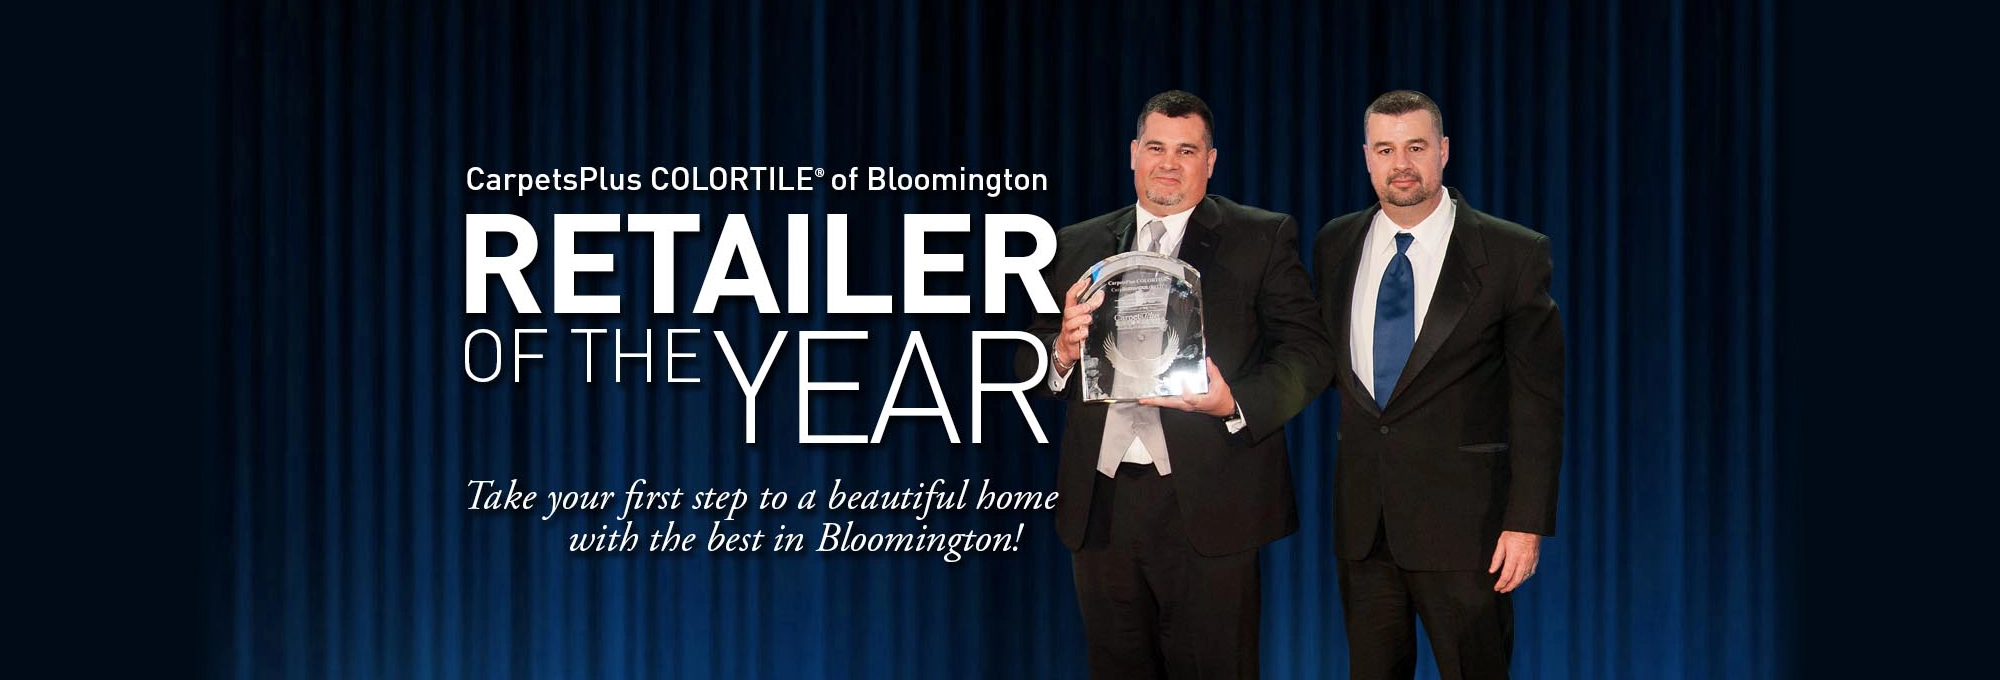 Retailer of the year - CarpetsPlus COLORTILE of Bloomington